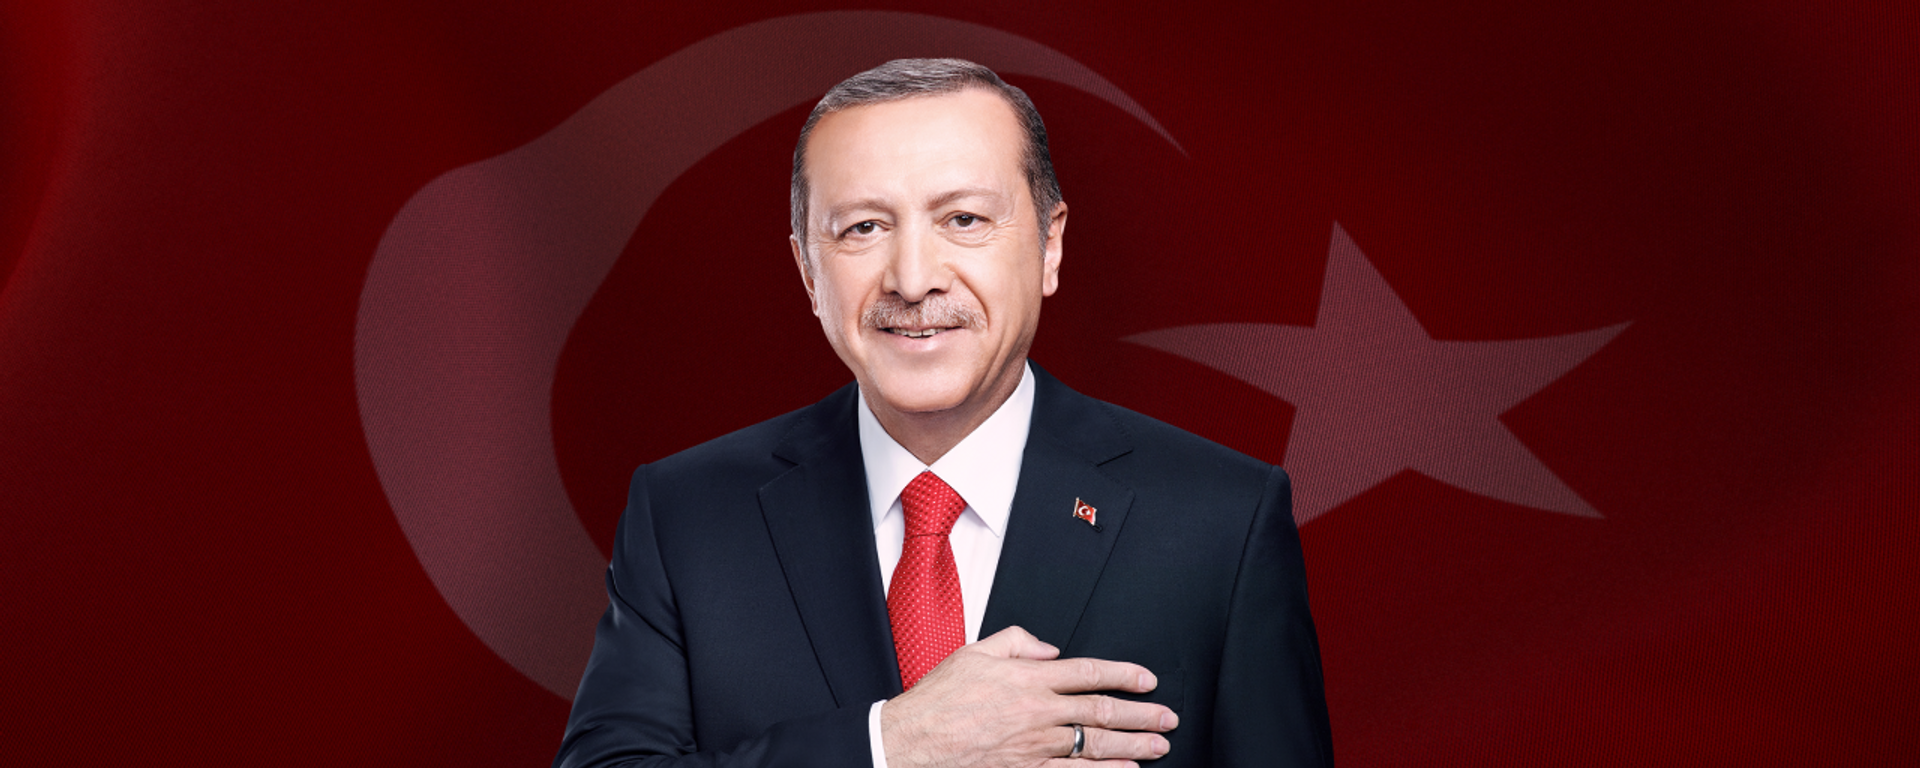 Erdogan Receives 52.18% of Vote in Turkish Presidential Election - Sputnik International, 1920, 01.06.2023